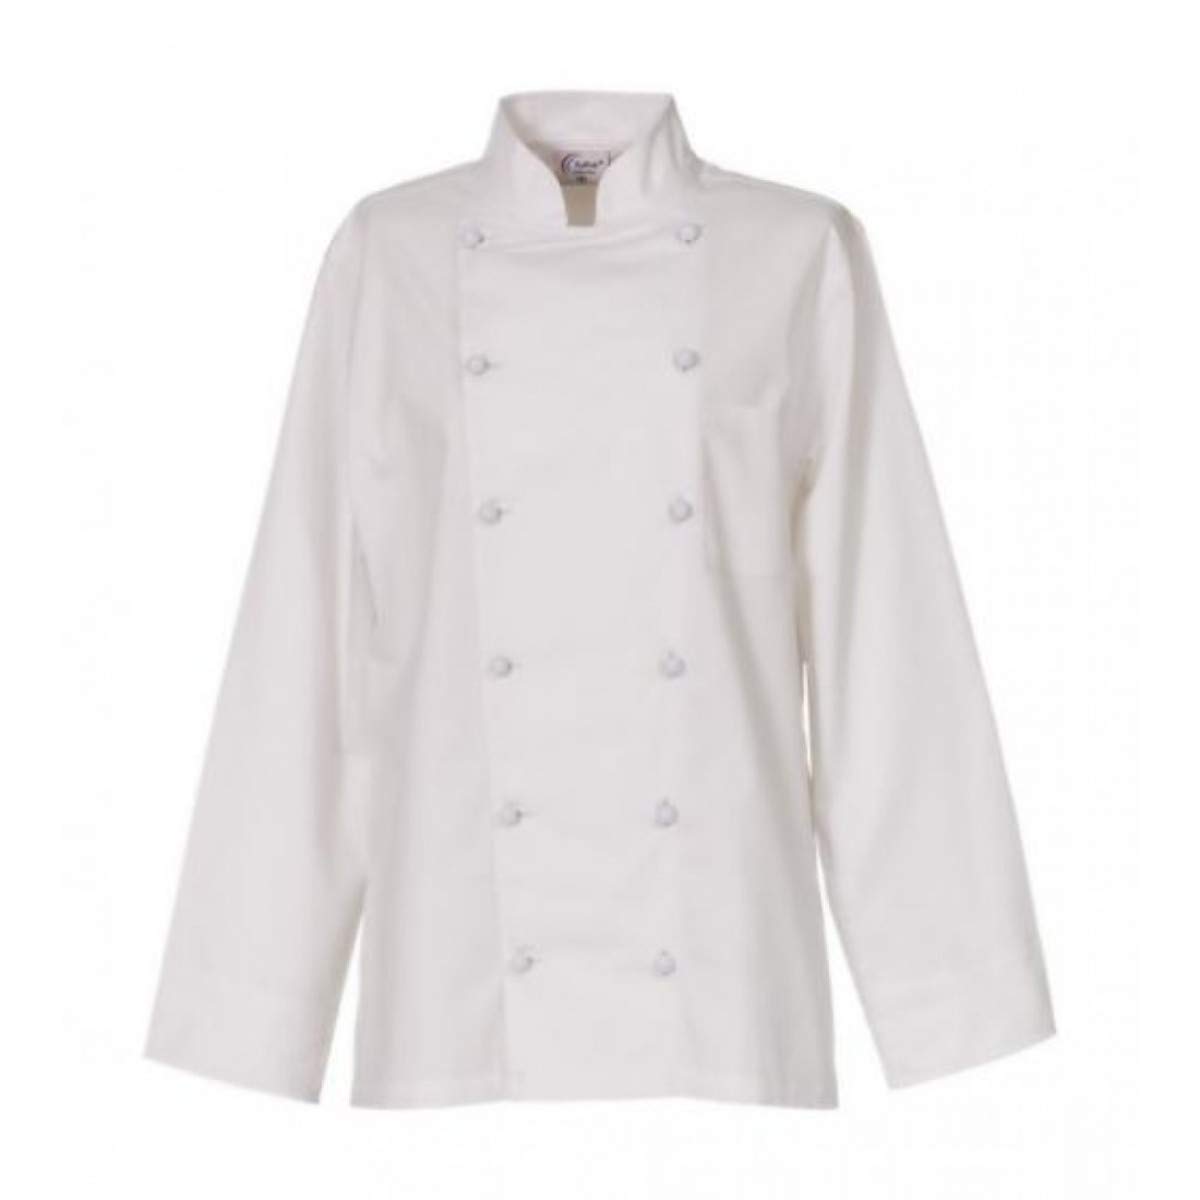 Gastro Uzal Damen-Kochjacke Langarm/Ladies Chef Jacket Long Sleeve,XS-3XL,1Stk., Gastronomie/Catering/Party/Pub/Bar/Kitchen (M)